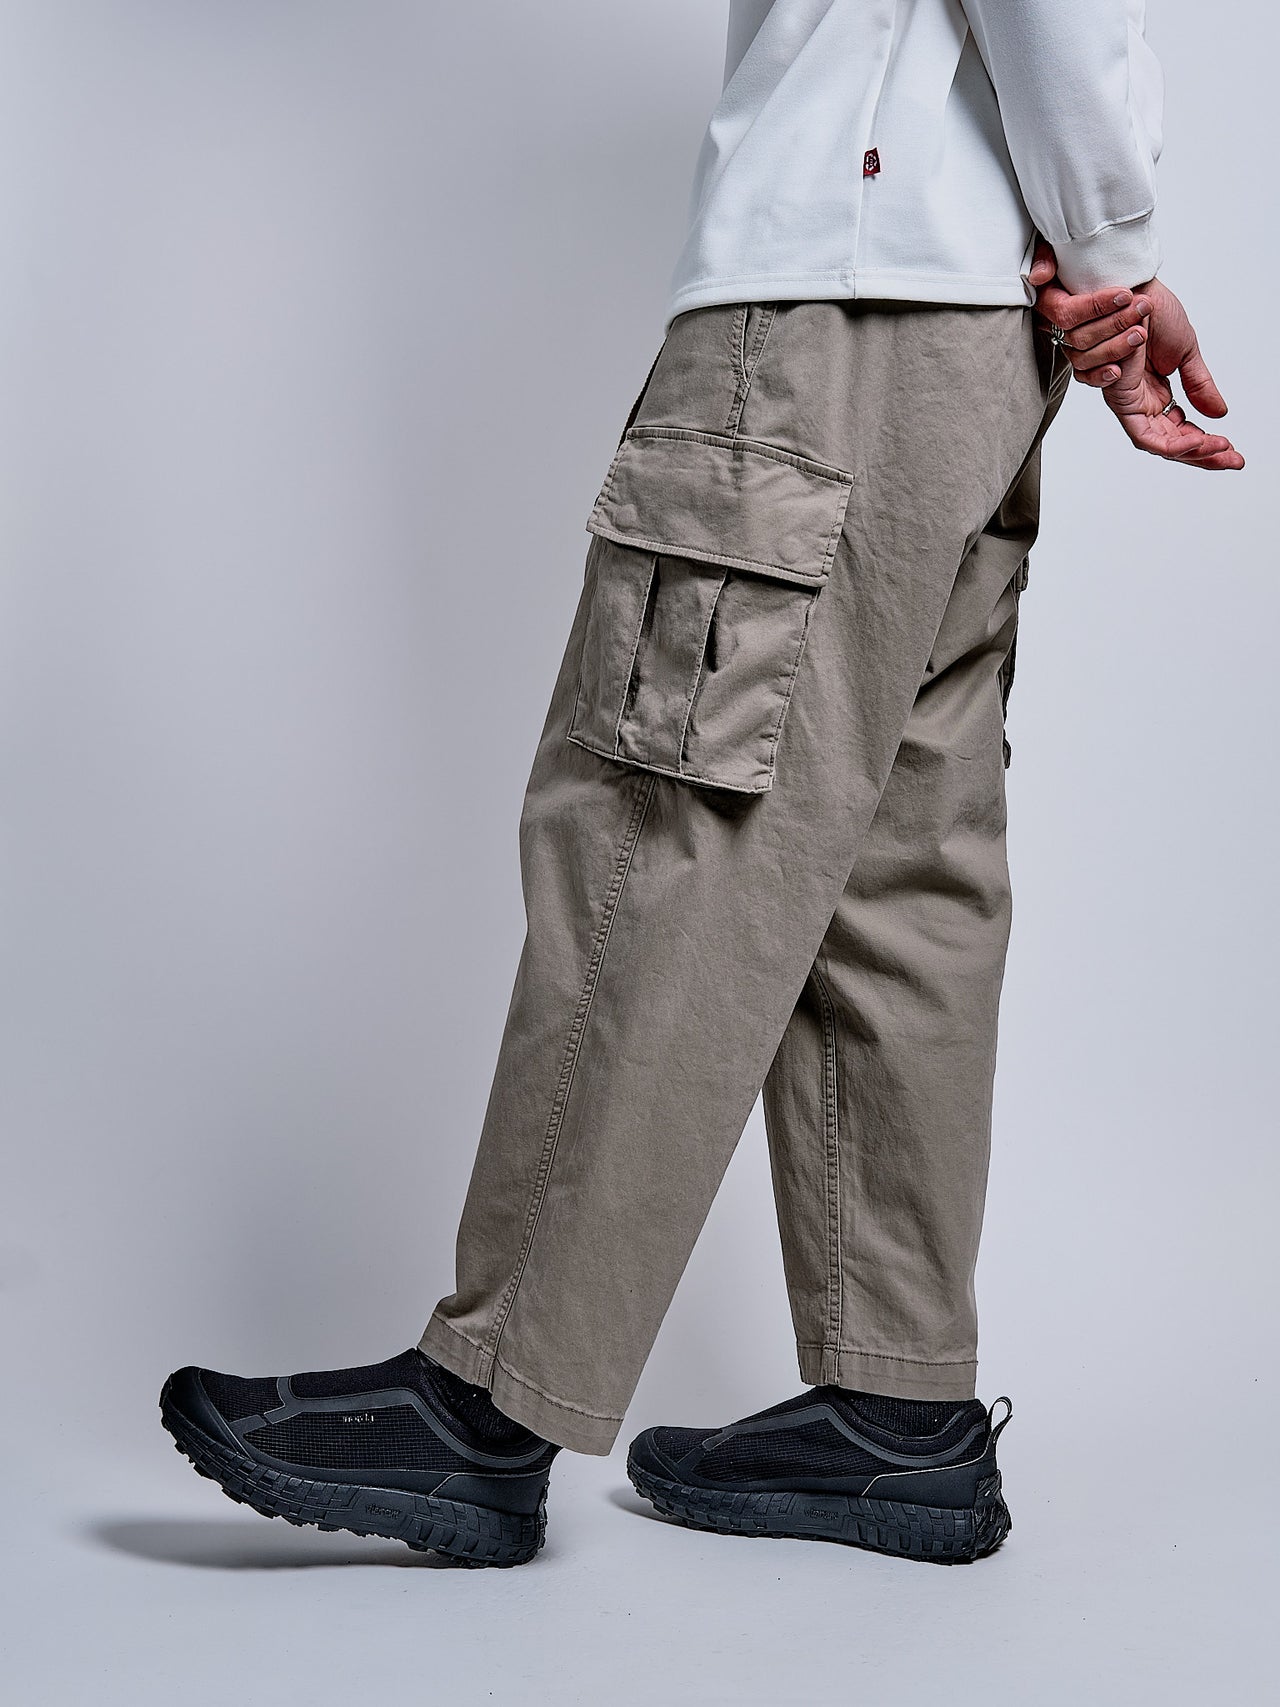 Flex Climber Cargo Pant in Light Grey